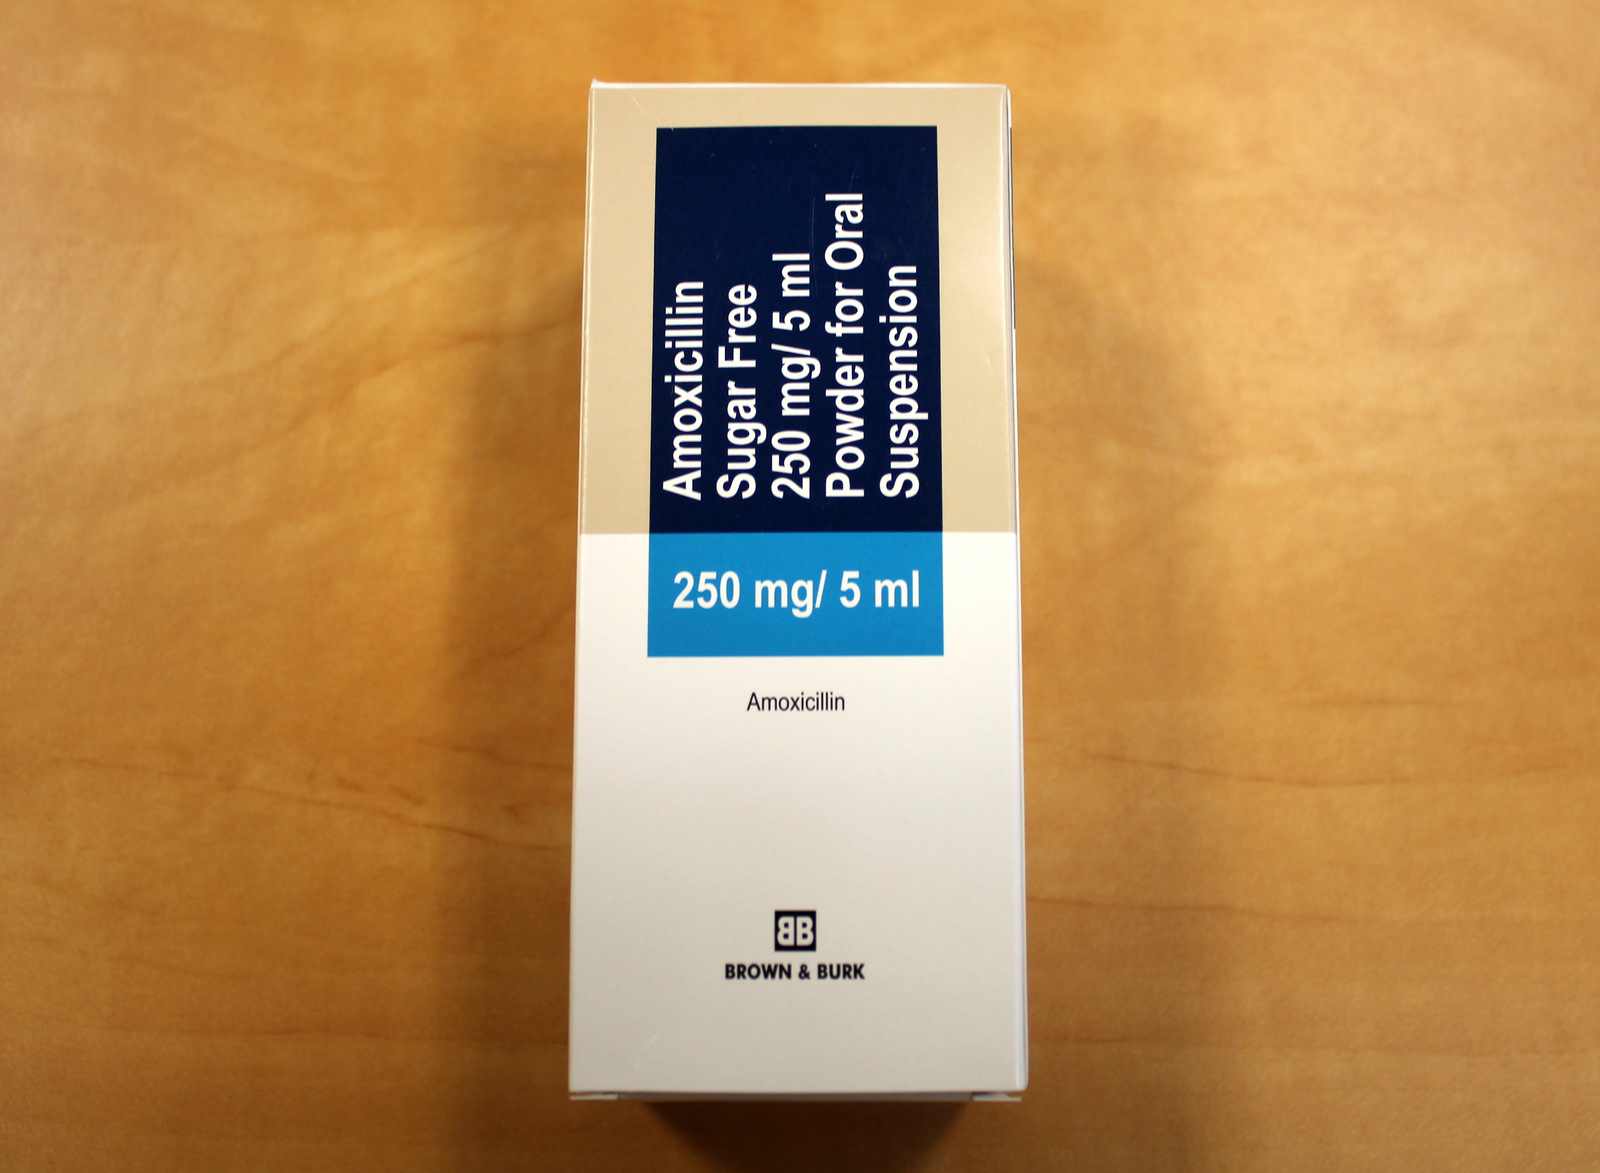 Amoxicillin 250mg/5ml Powder For Oral Solution